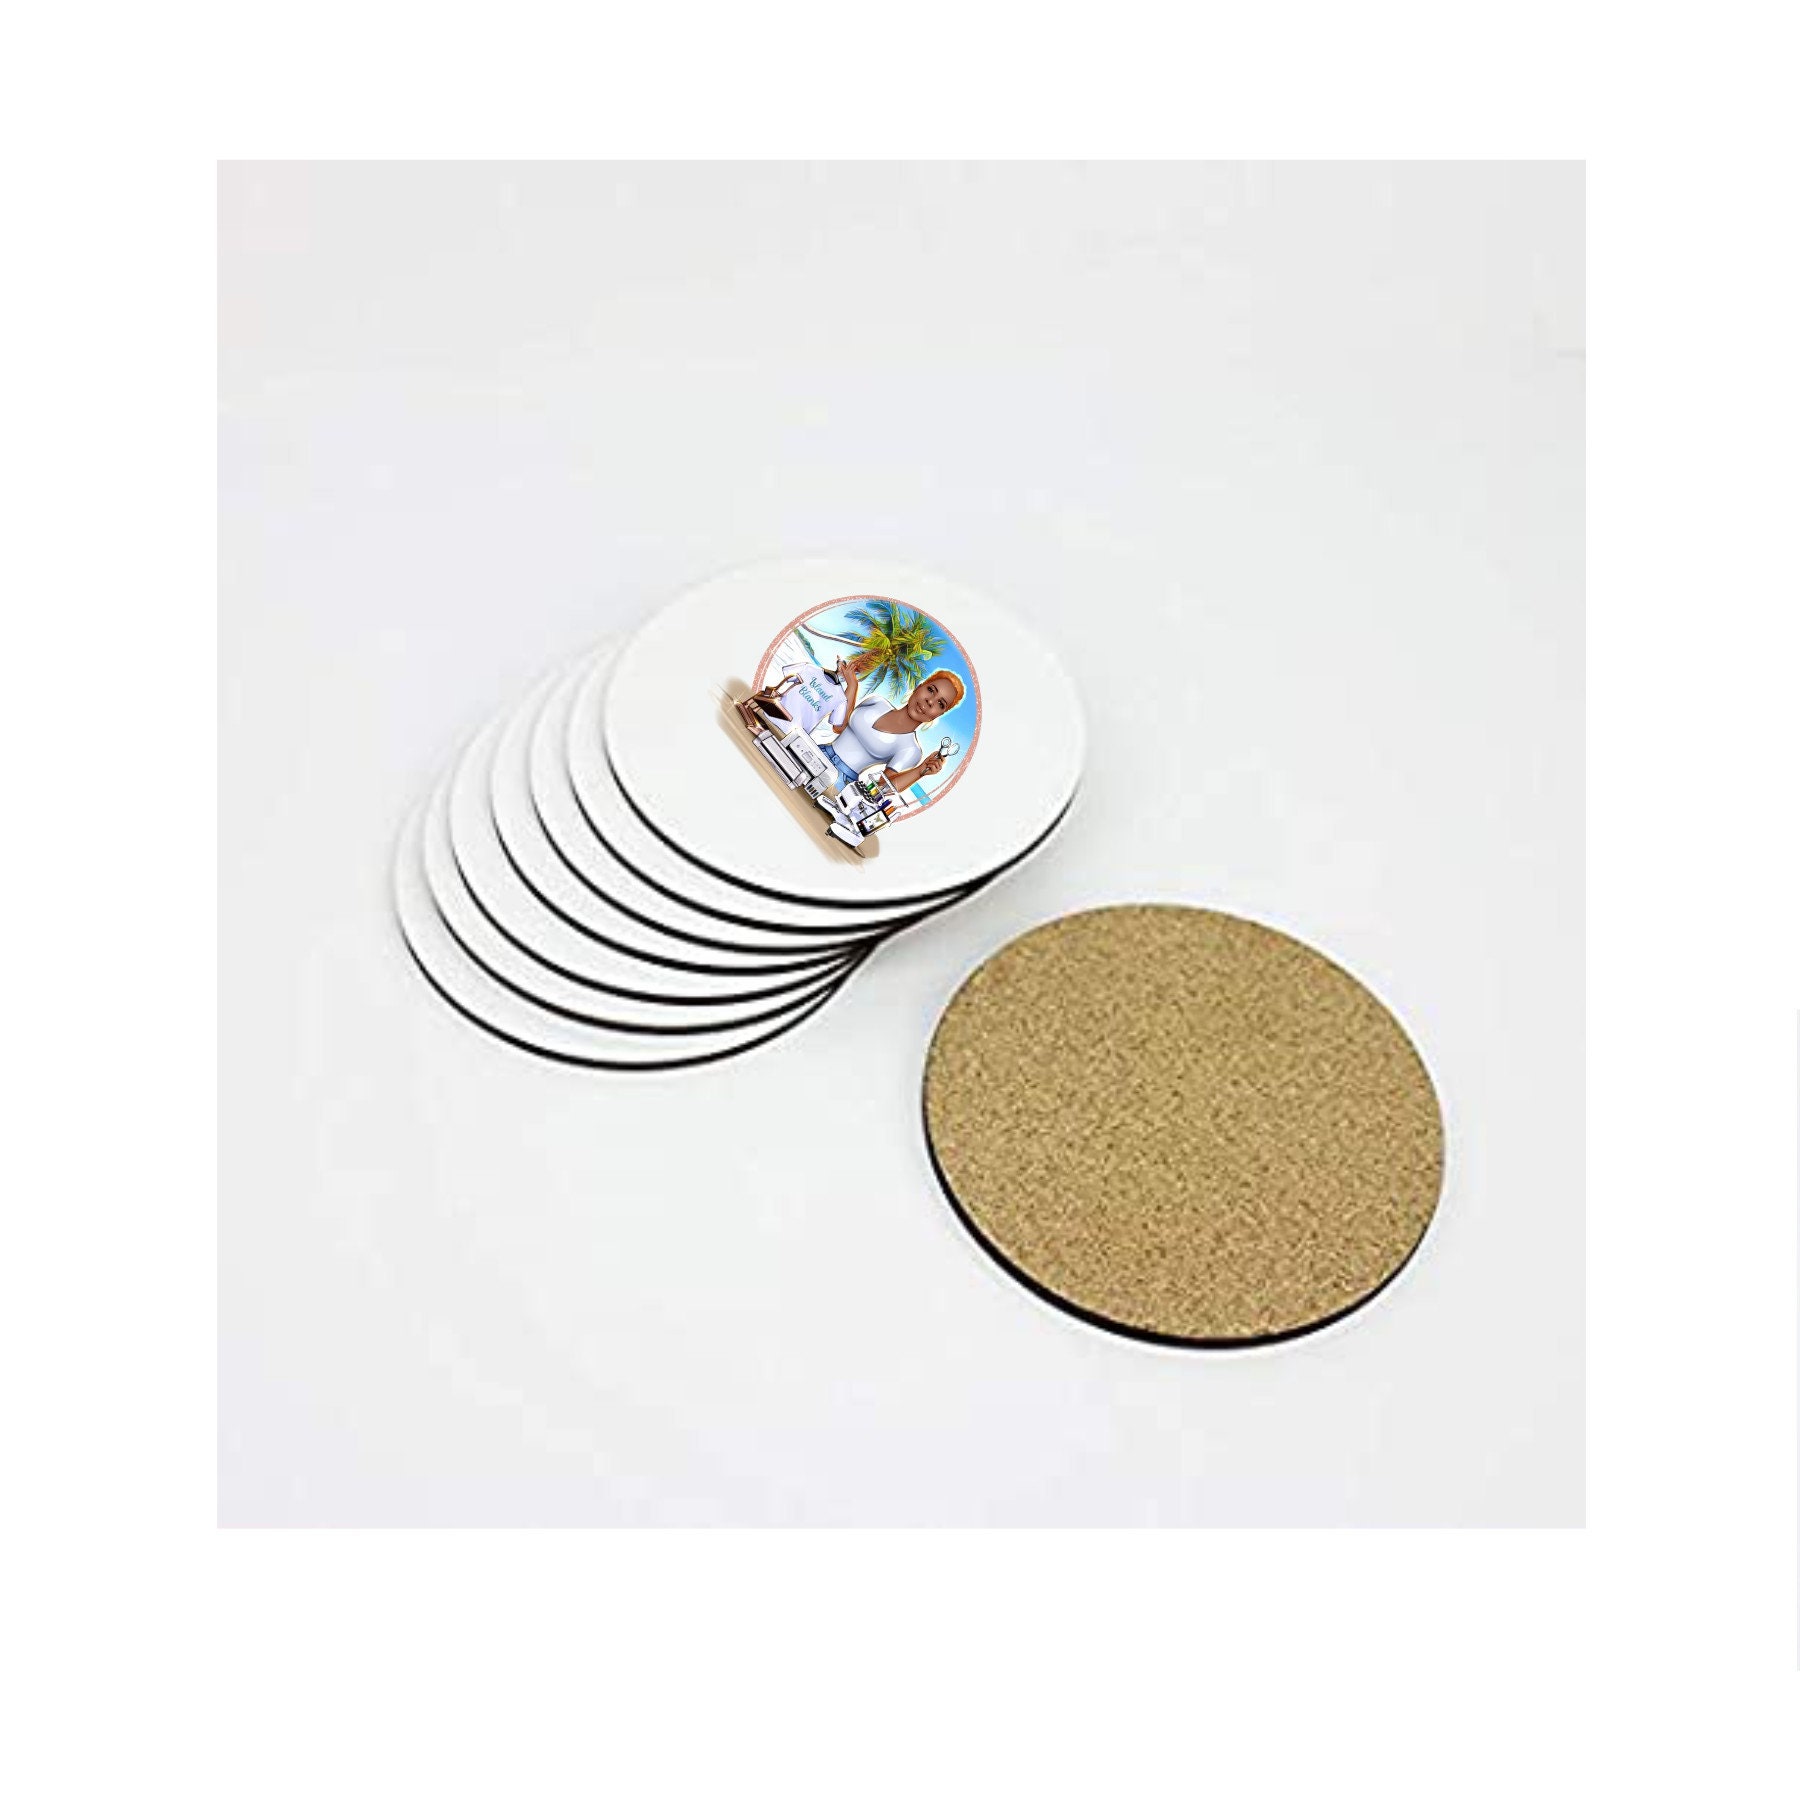 9cm Sublimation Blank Ceramic Coaster White Ceramic Coasters Heat Transfer  Printing Custom Cup Mat Pad Thermal Coasters Sn3565 - Mats & Pads -  AliExpress